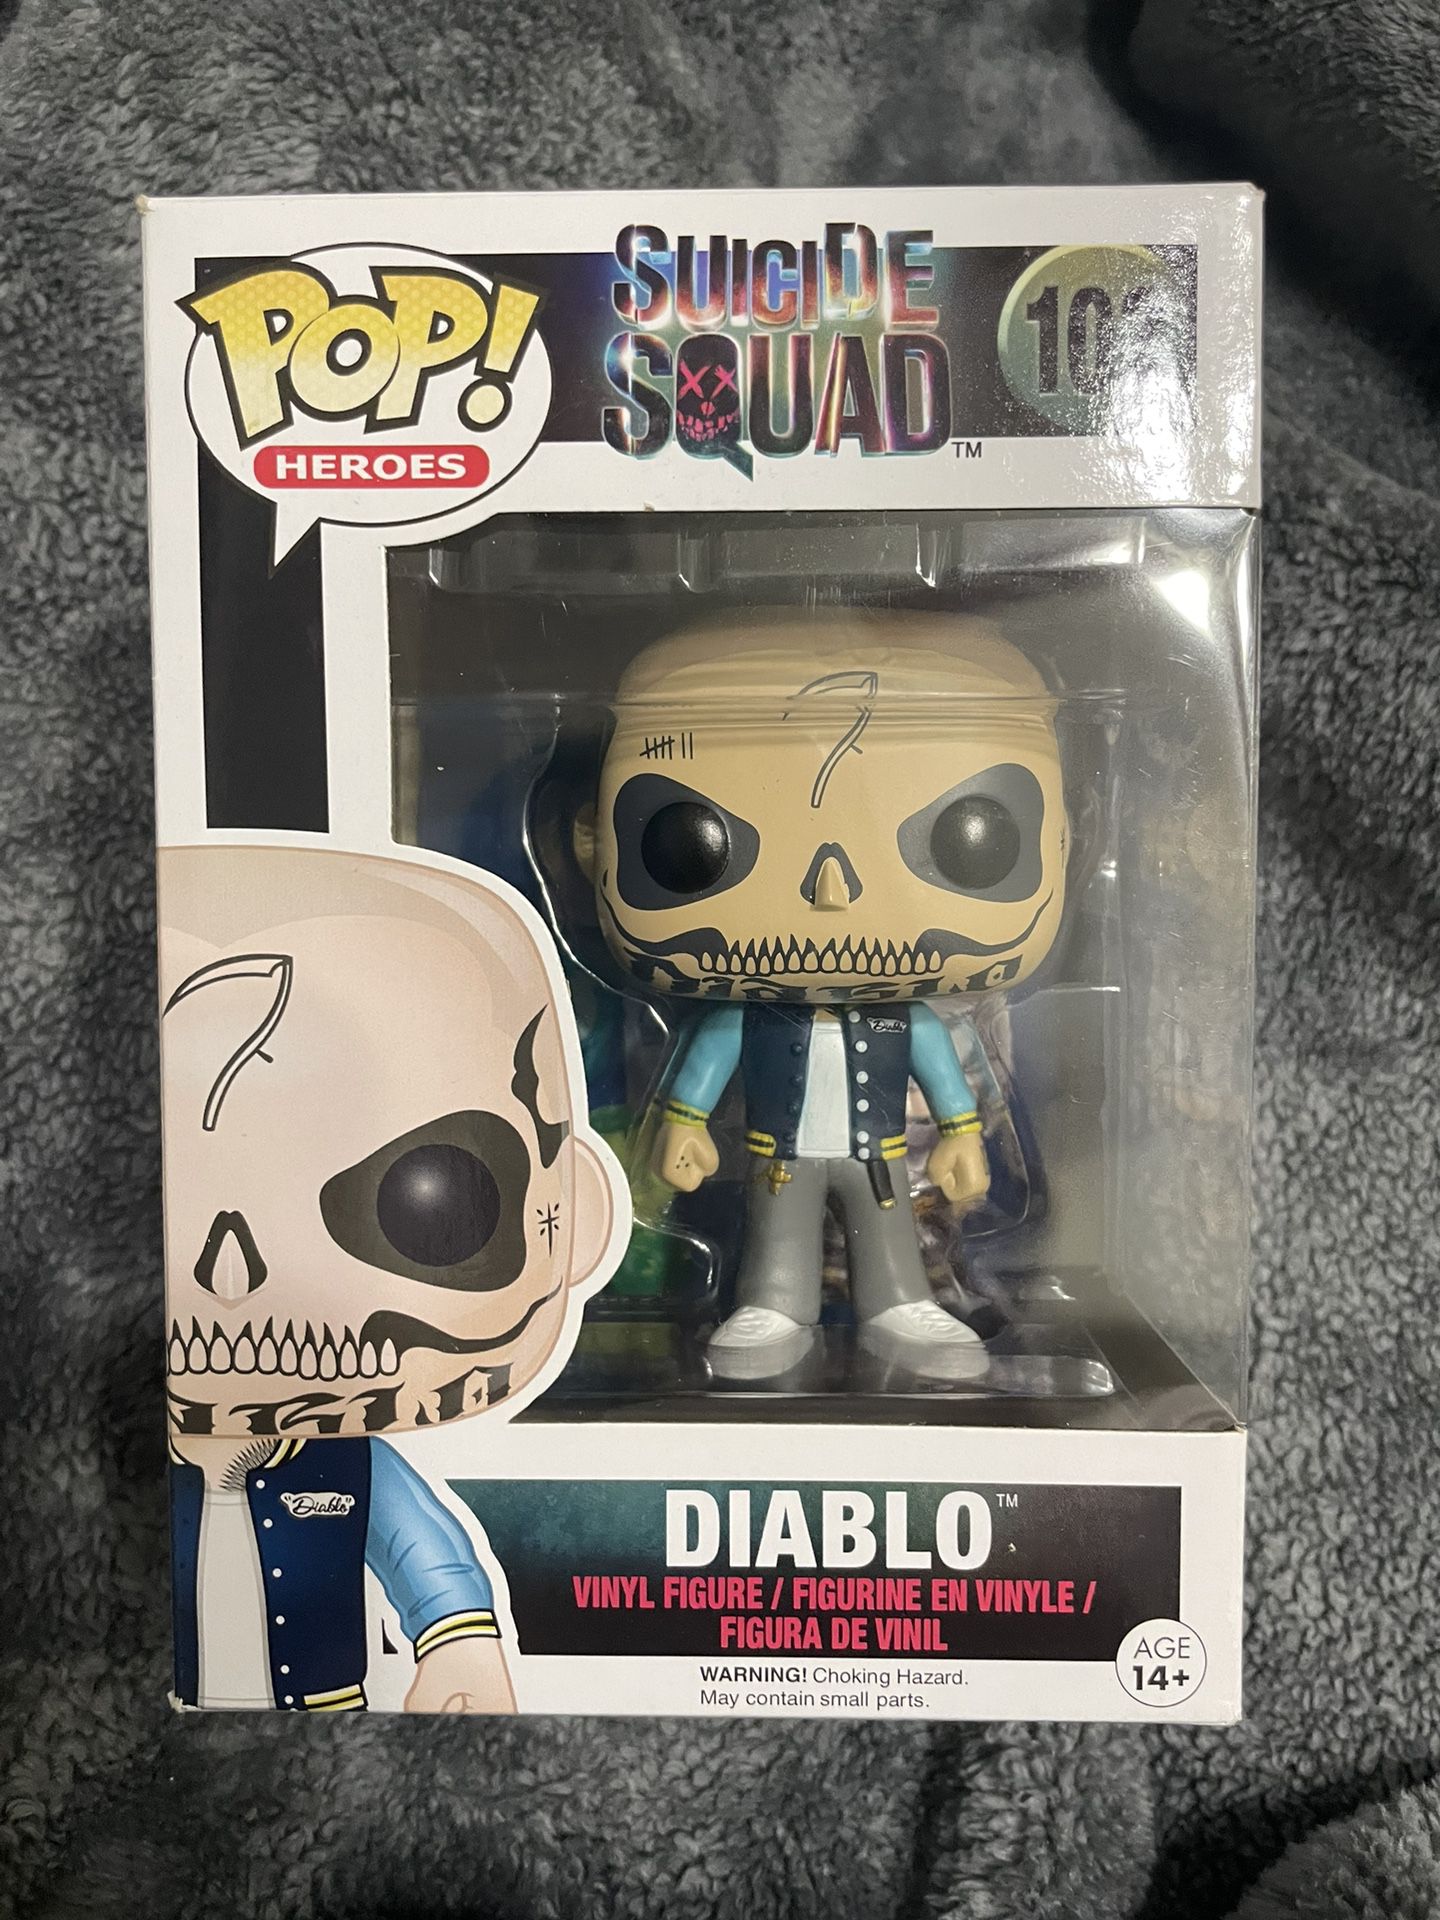 Diablo (Suicide Squad) Funko Pop